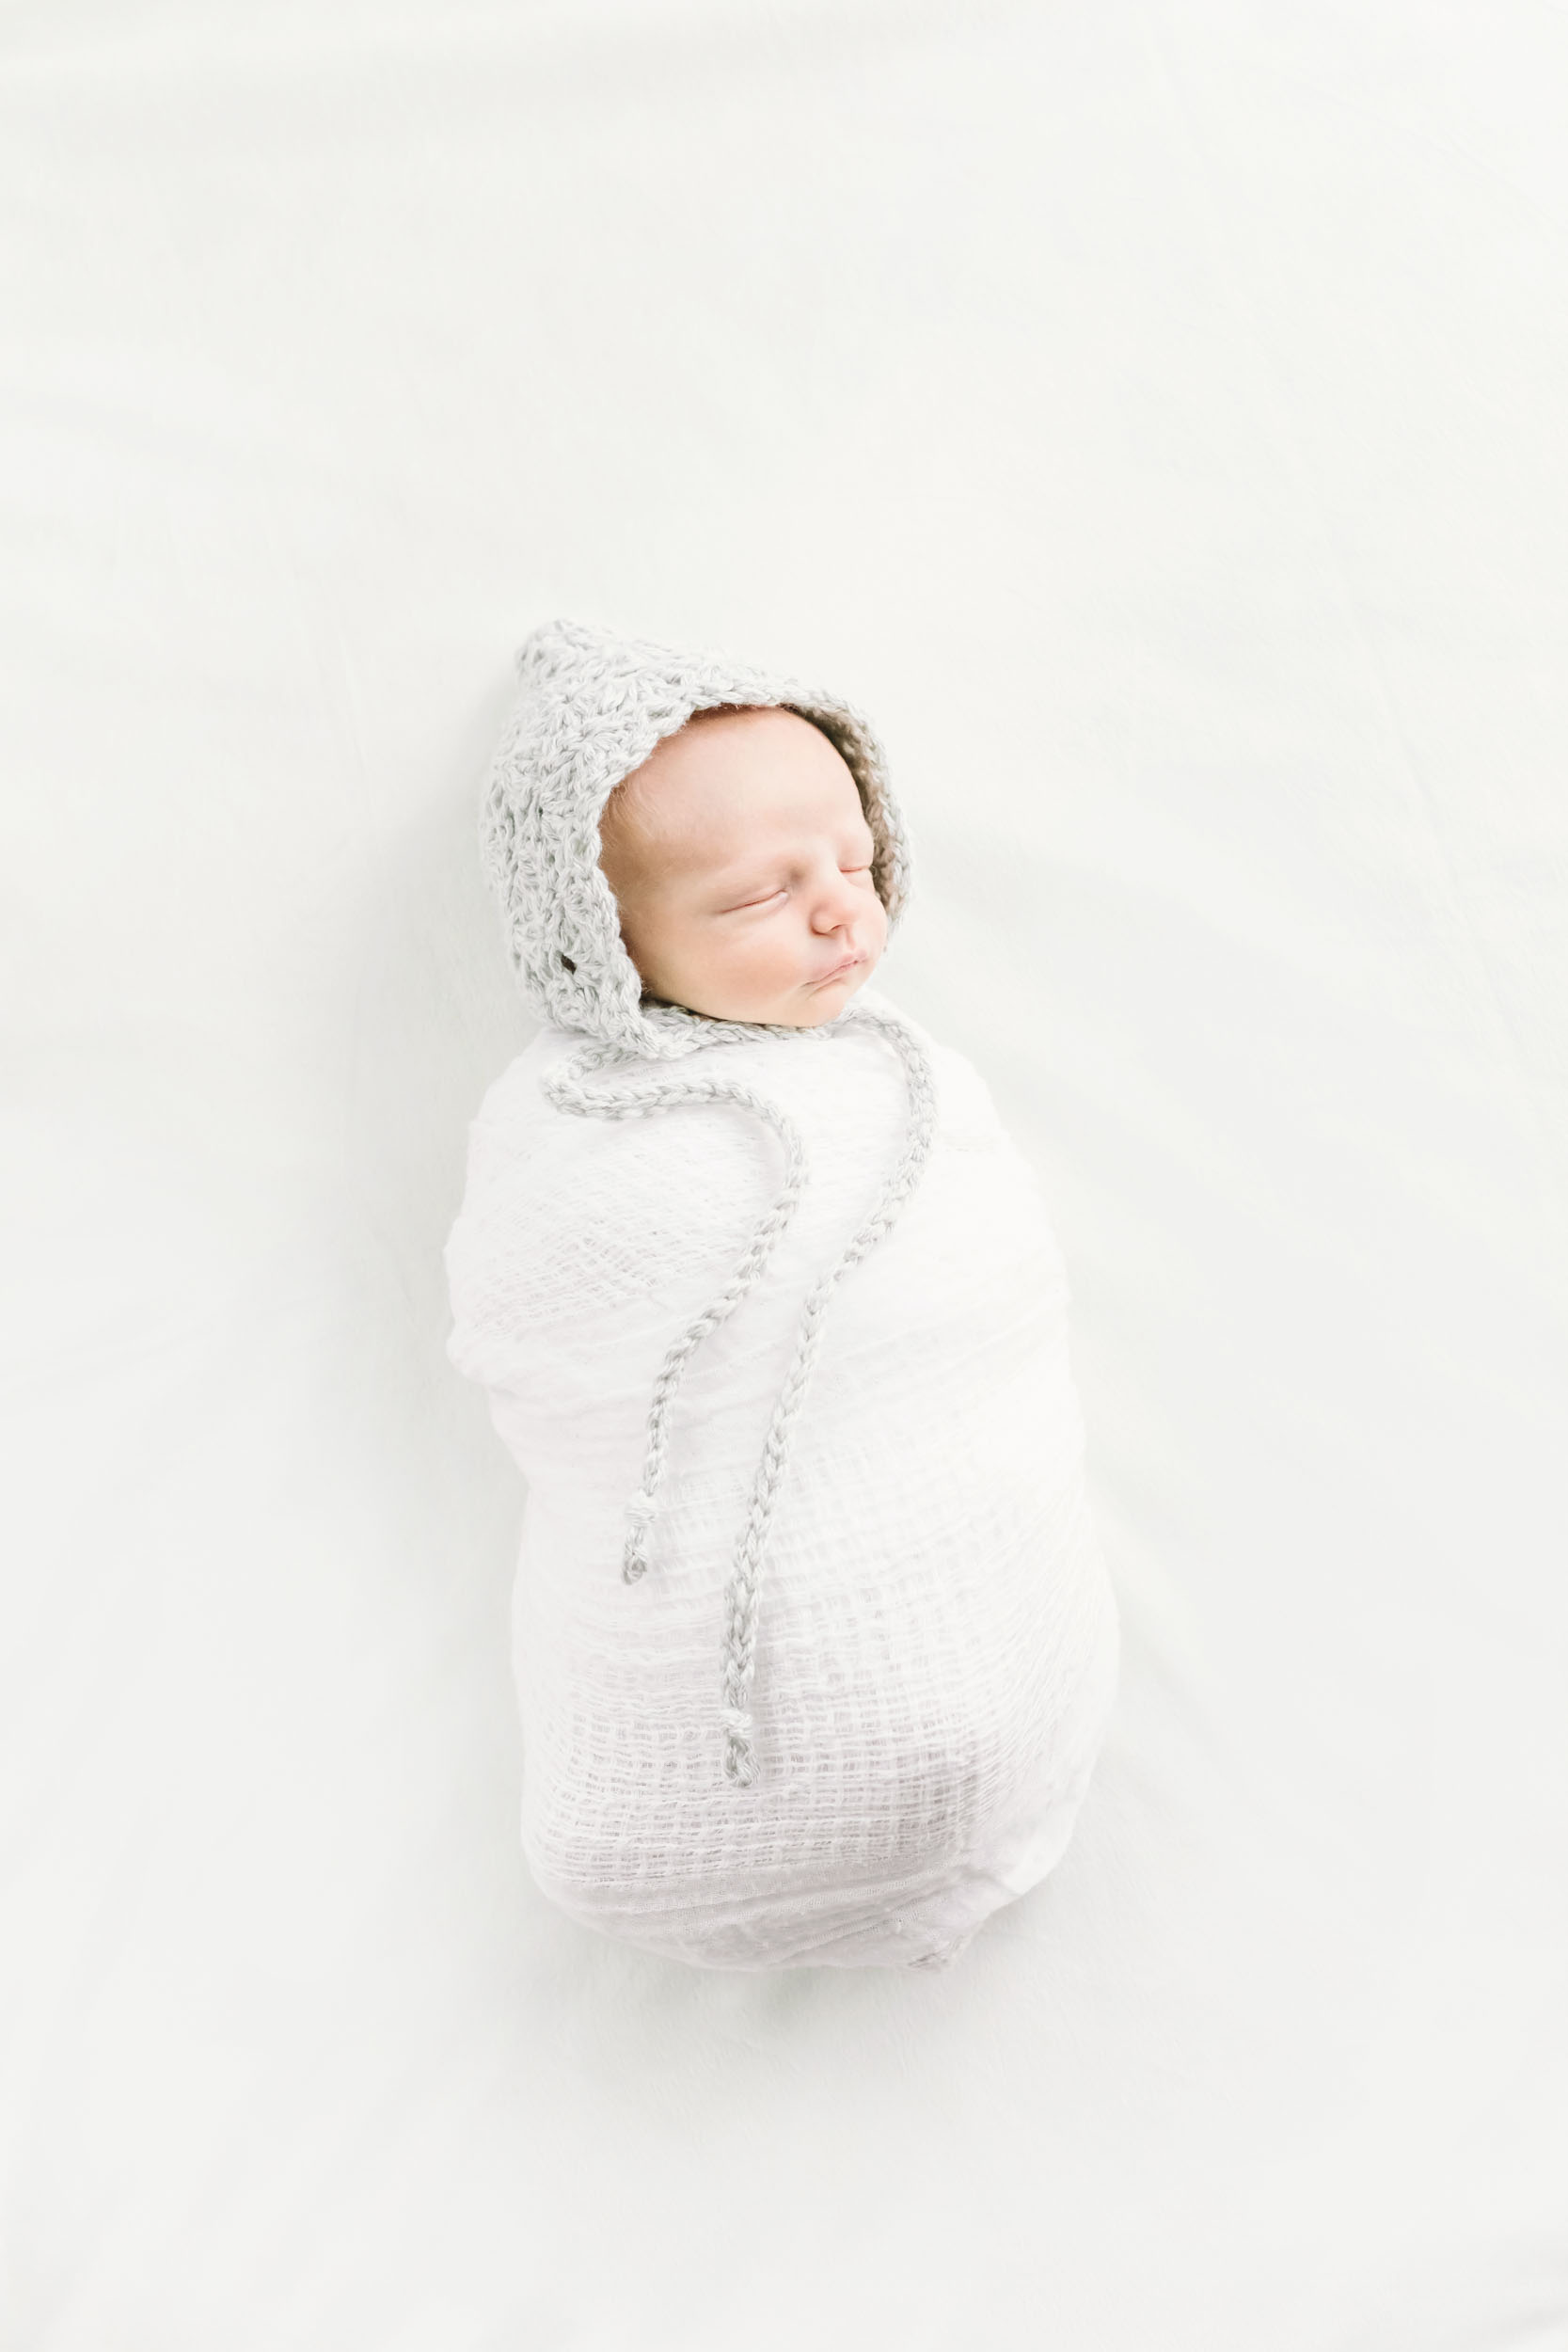 Geneva Illinois Newborn Photographer_Cassie Schott Photography_In Home Session_2.jpg